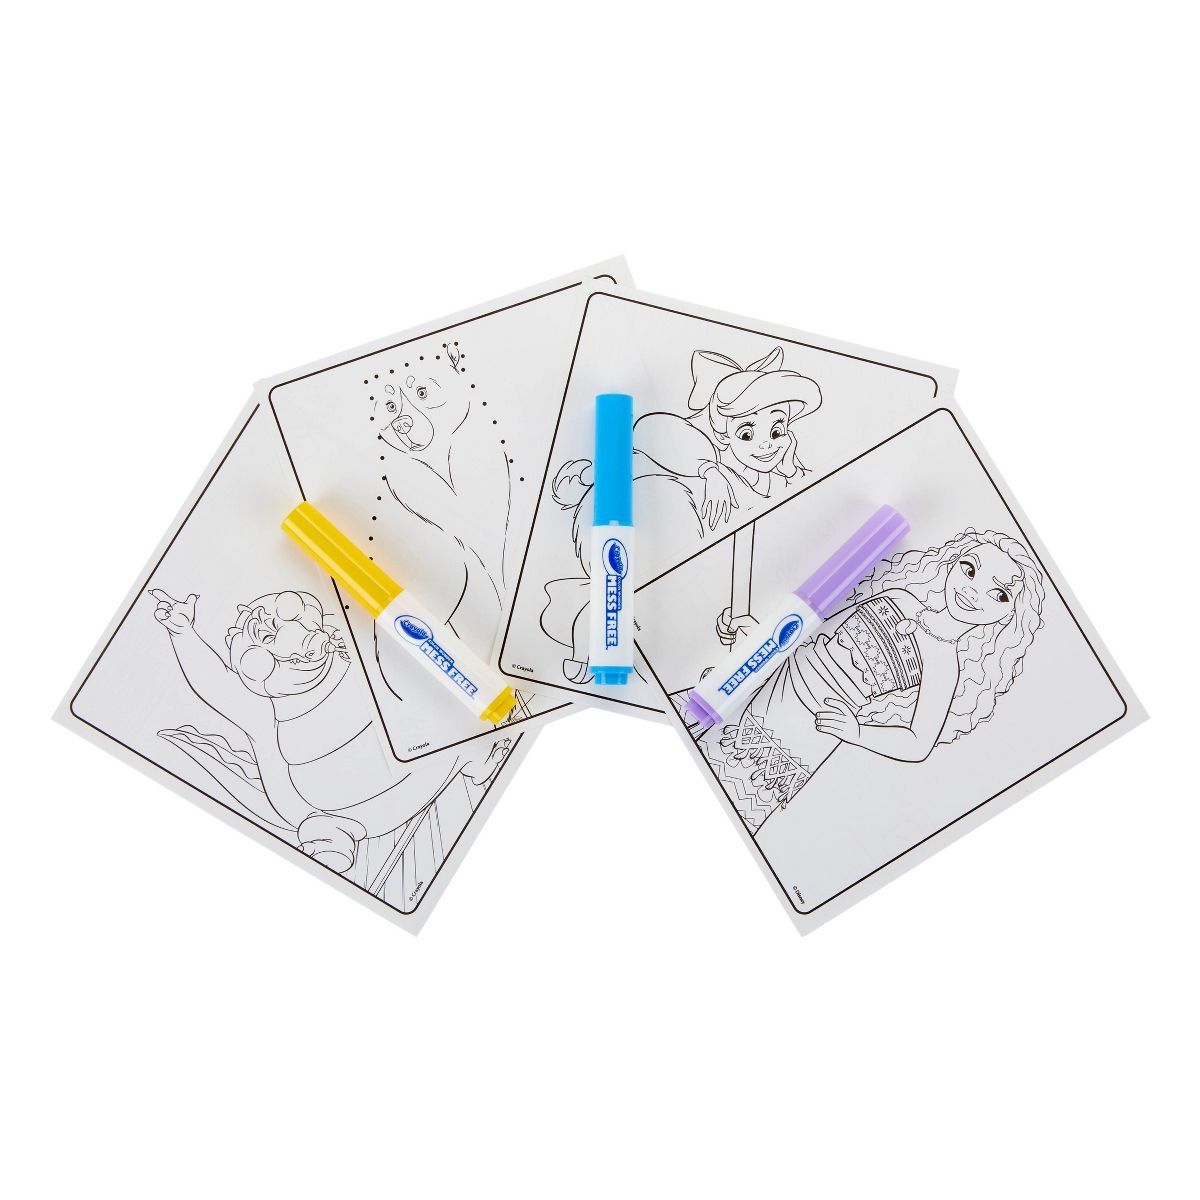 Crayola Disney Princess Color Wonder Mess Free Coloring Activity Pad | Target